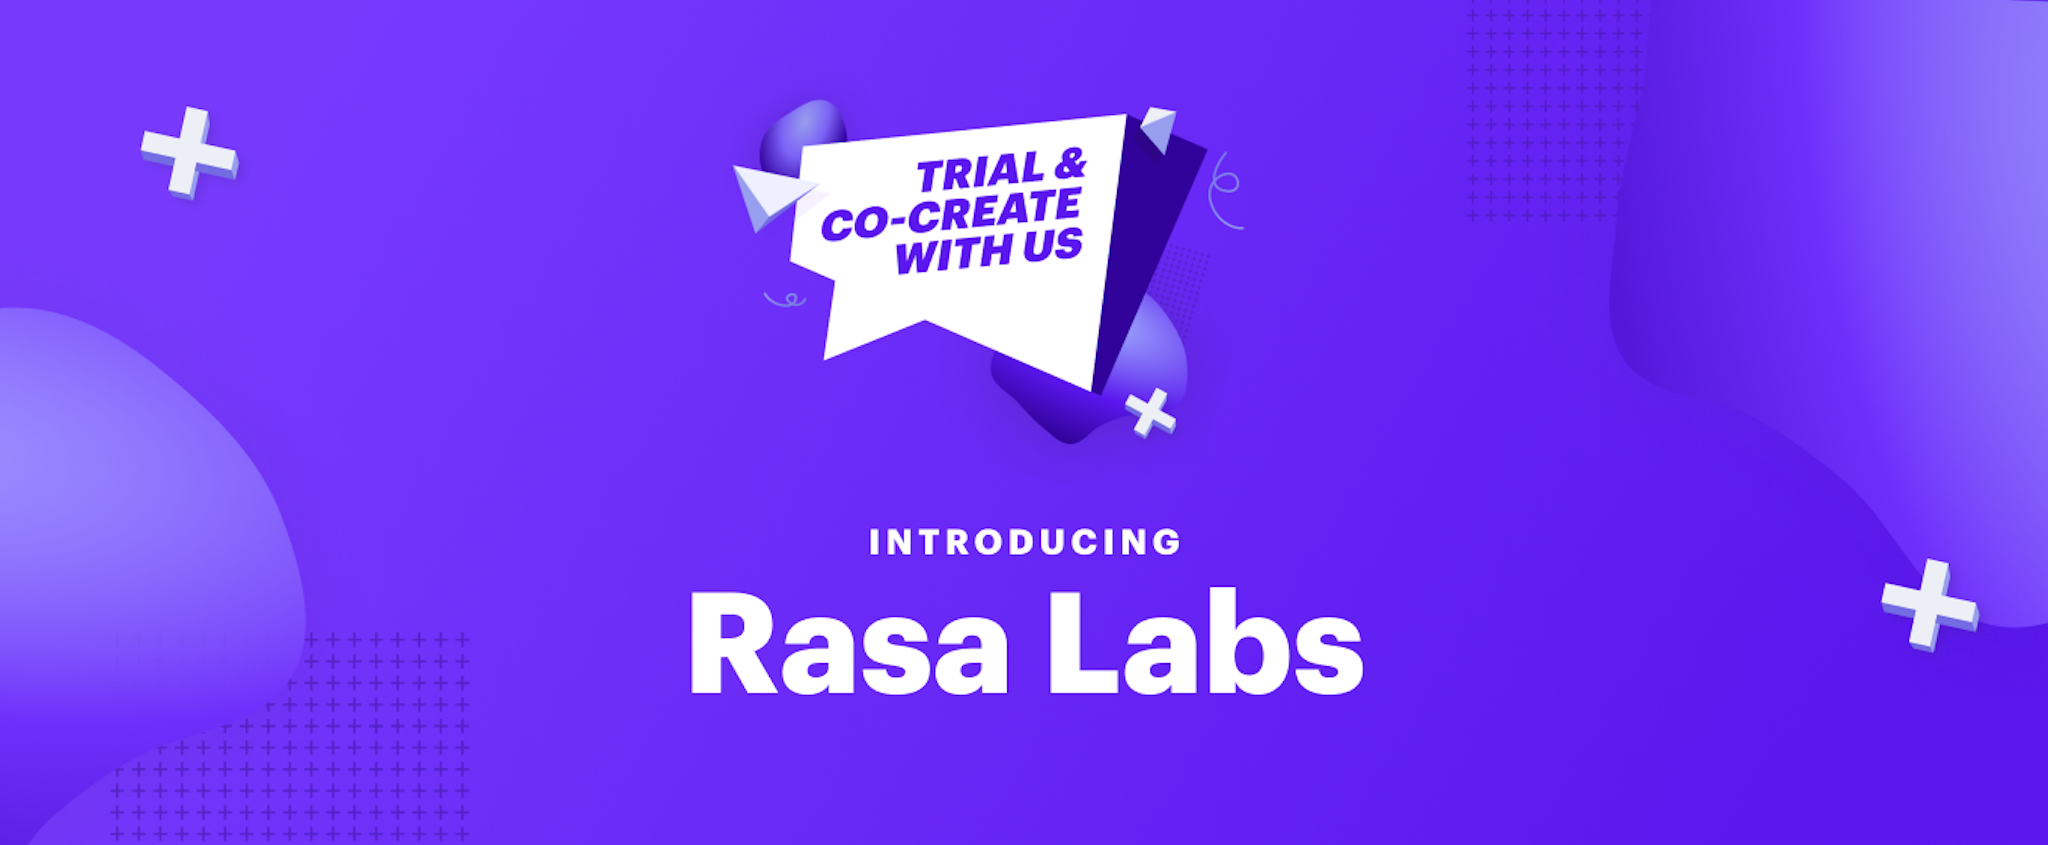 Introducing Rasa Labs